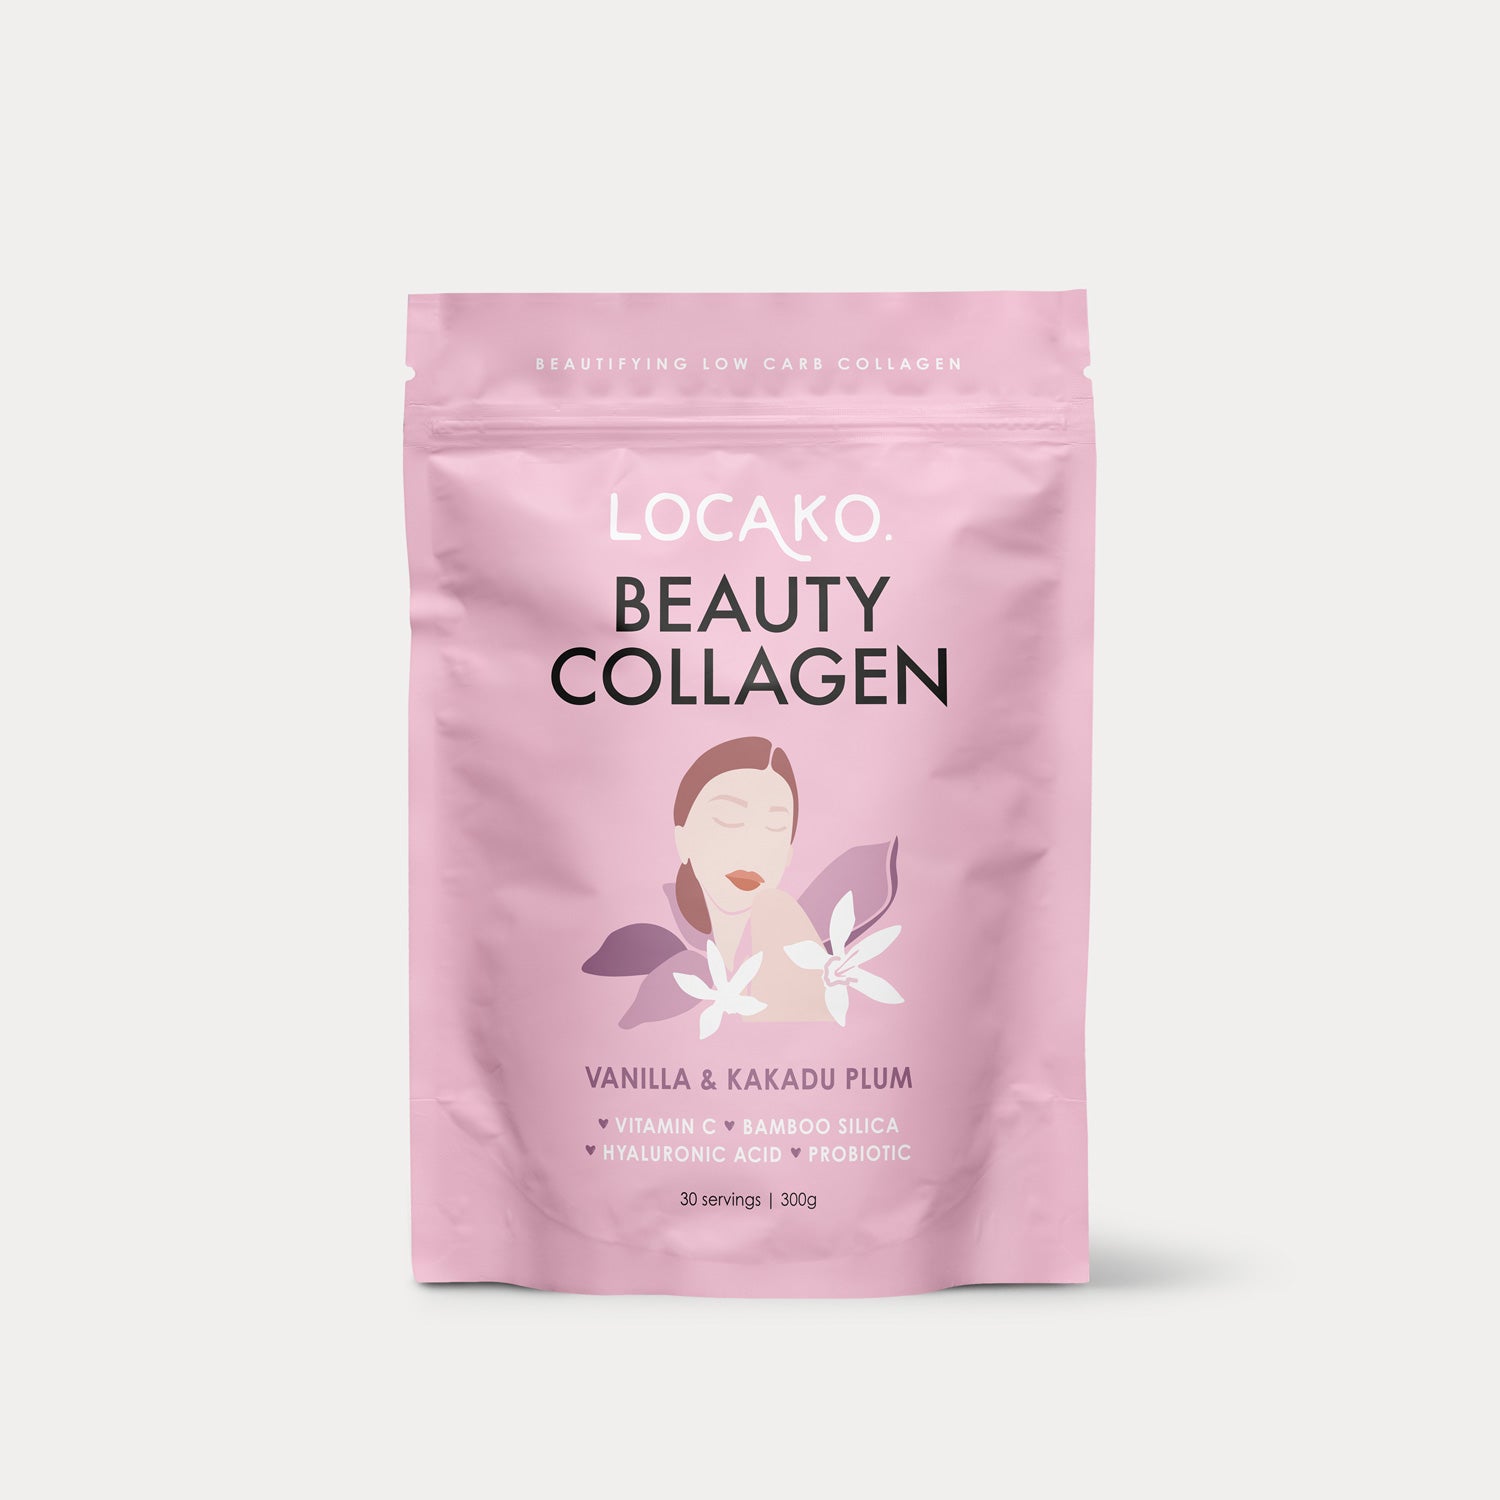 Locako Beauty Collagen - Locako